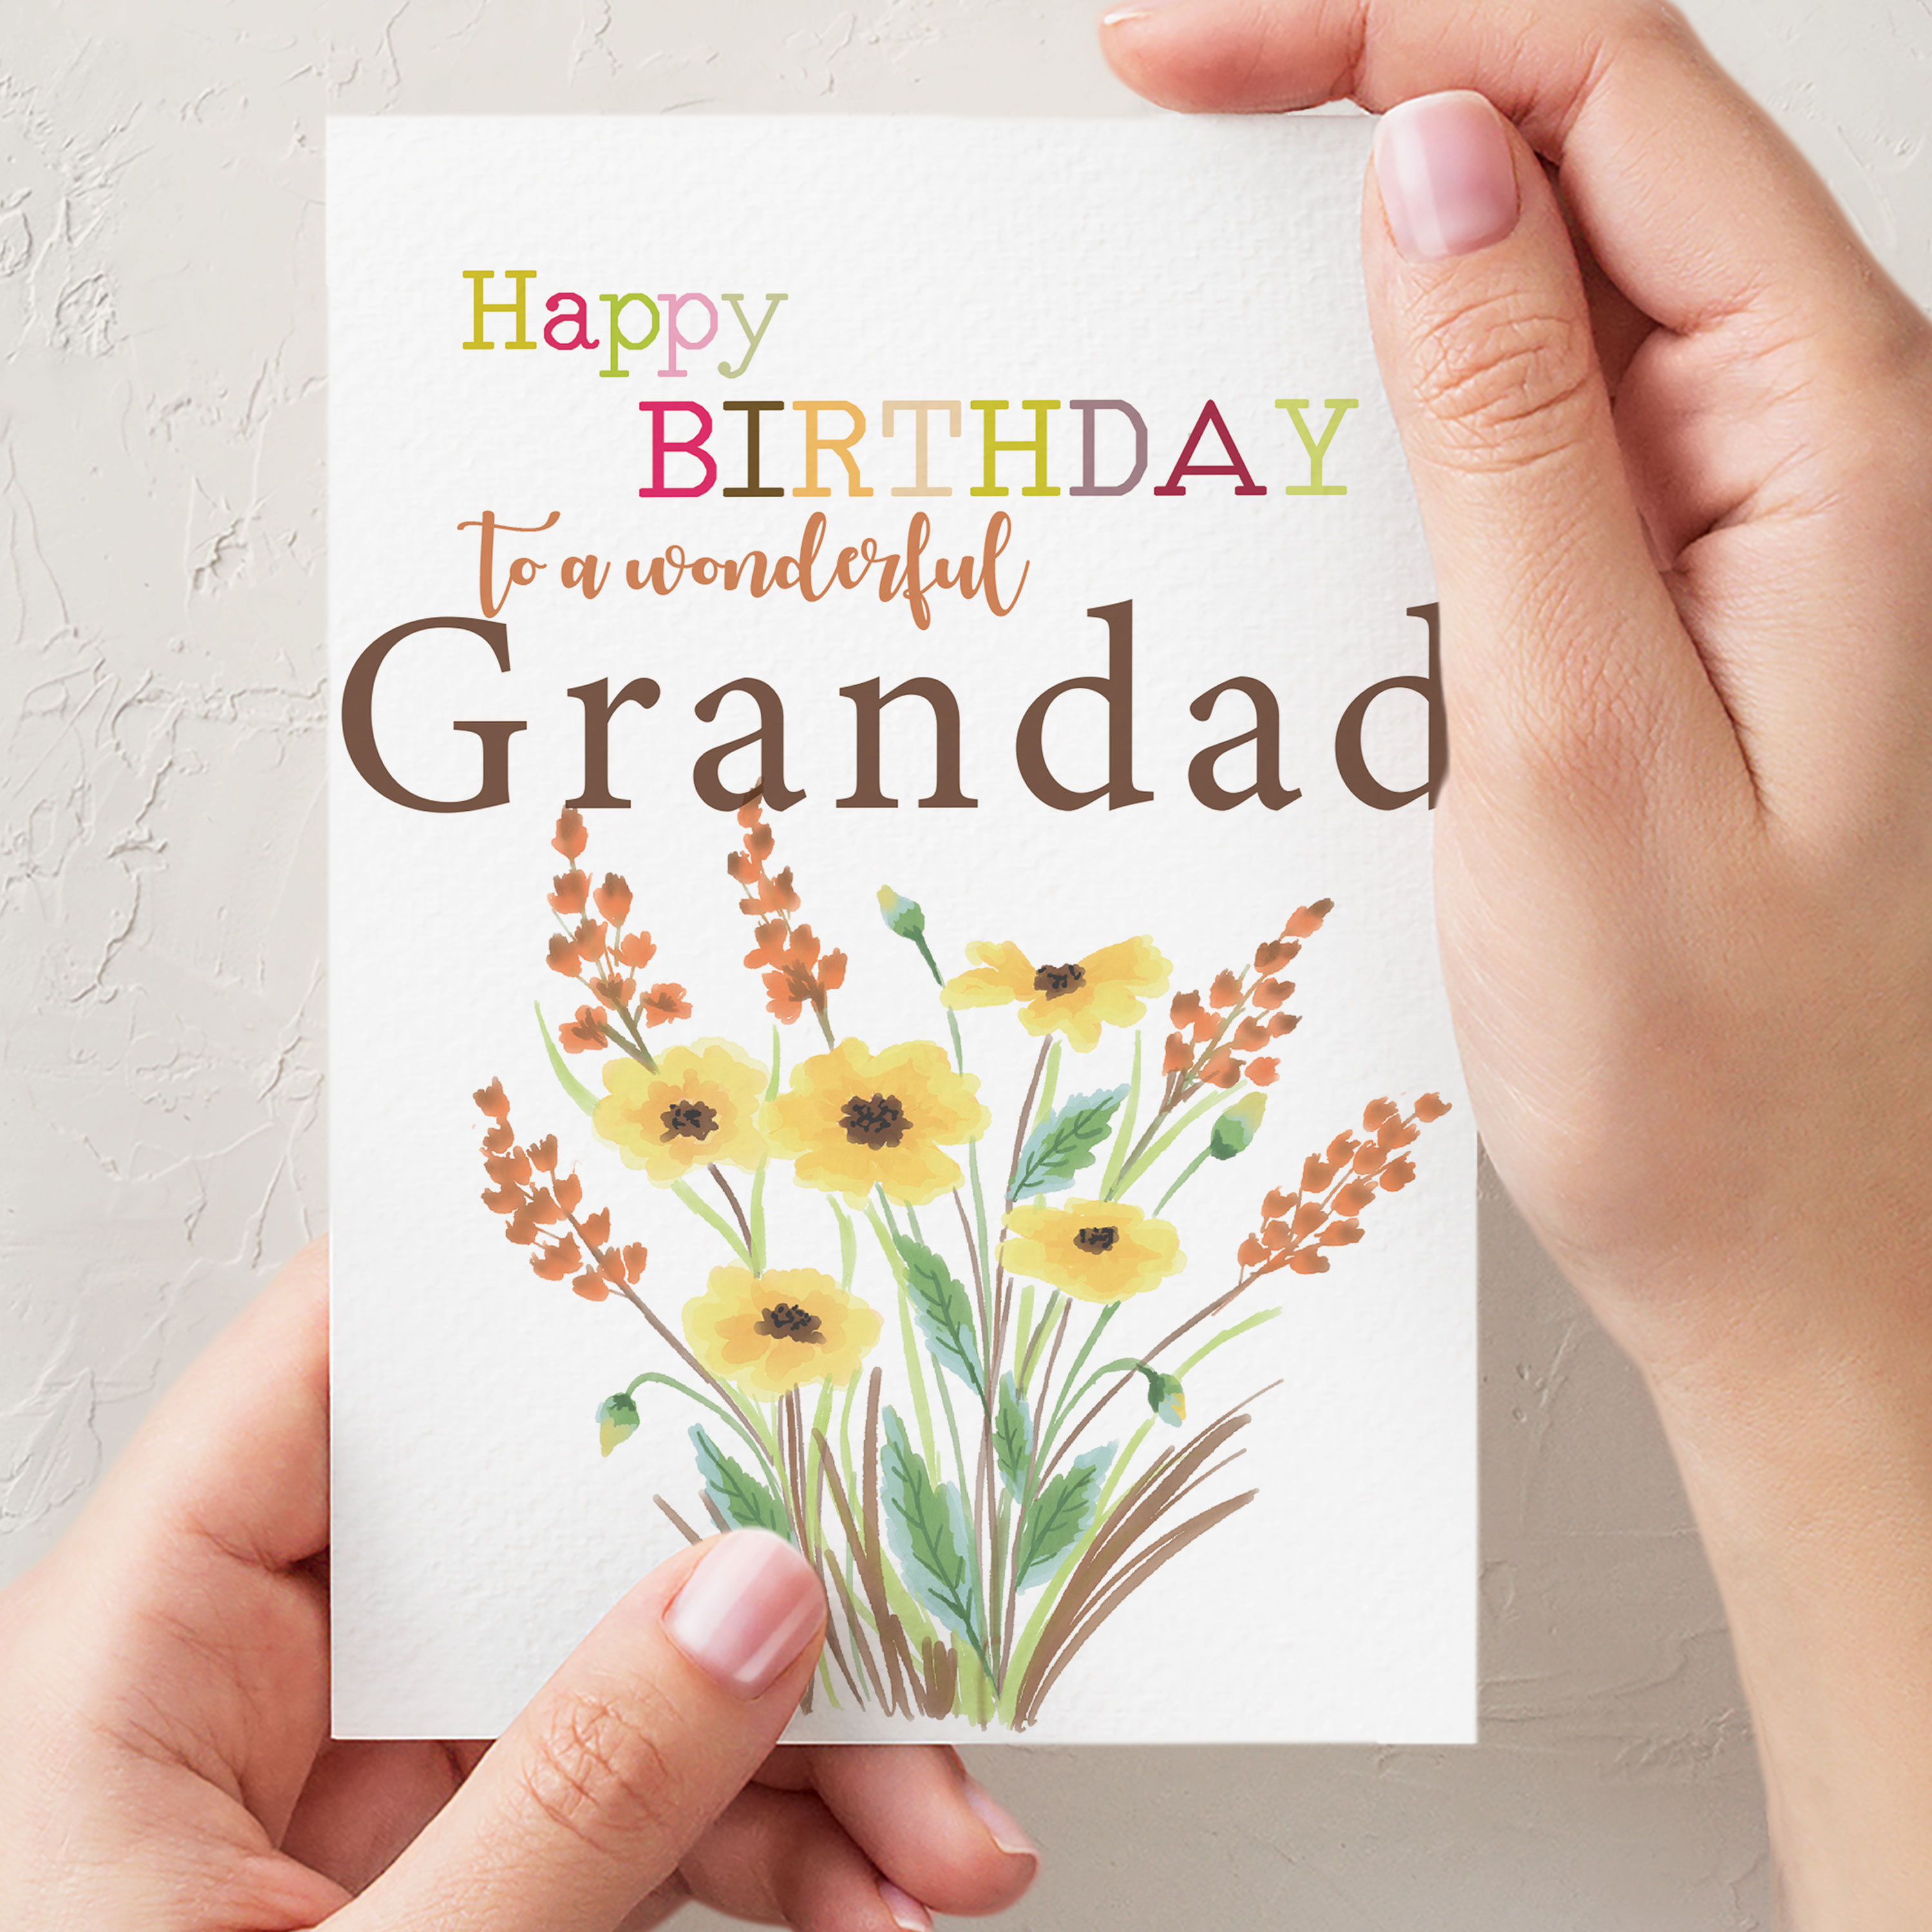 Grandad th birthday card